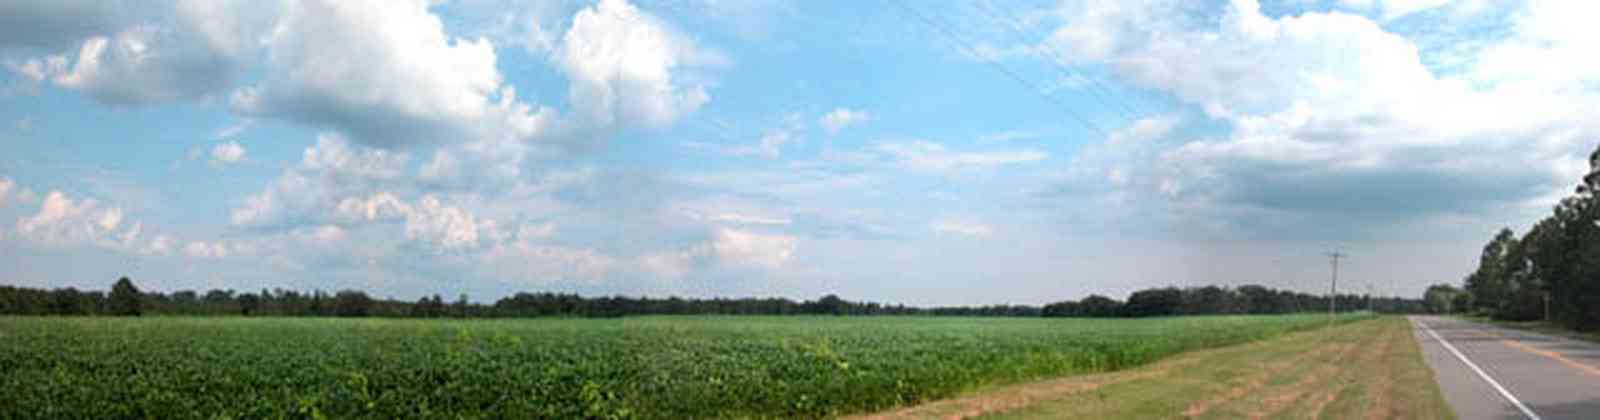 Walnut-Hill:-Highway-97-Soybean-Field_05.jpg:  crop, farmland, farmer, soybeans, crop rows, country road, highway, telephone line